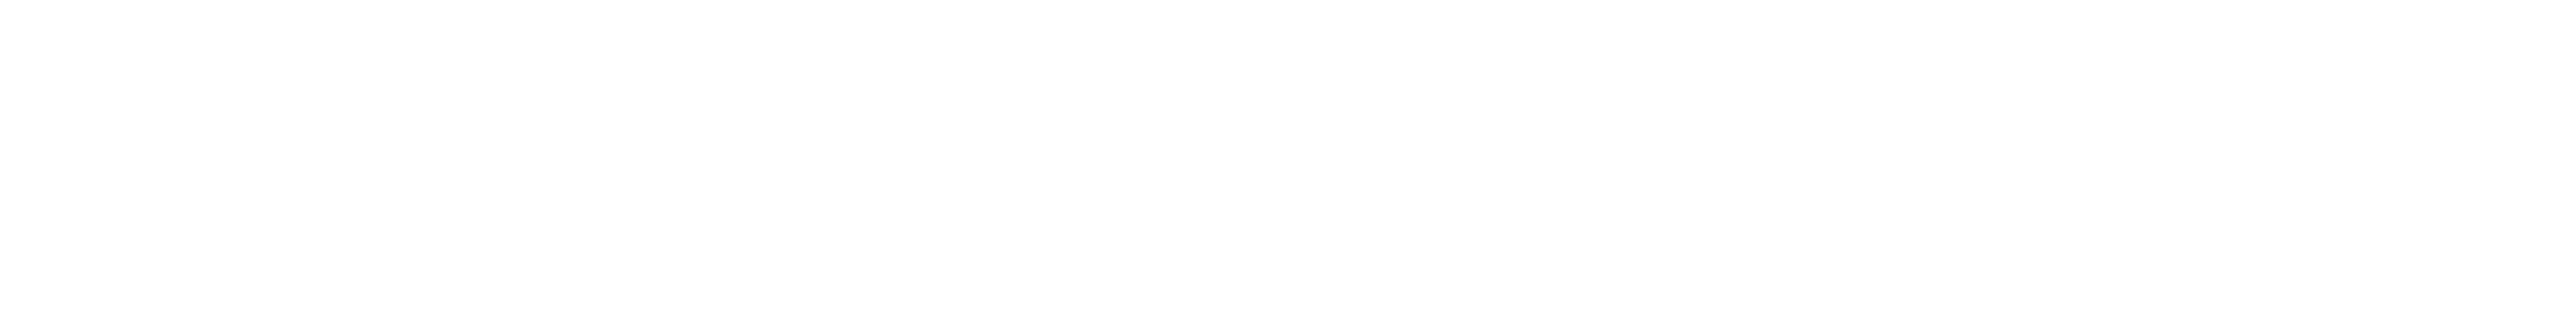 LARKINS logo